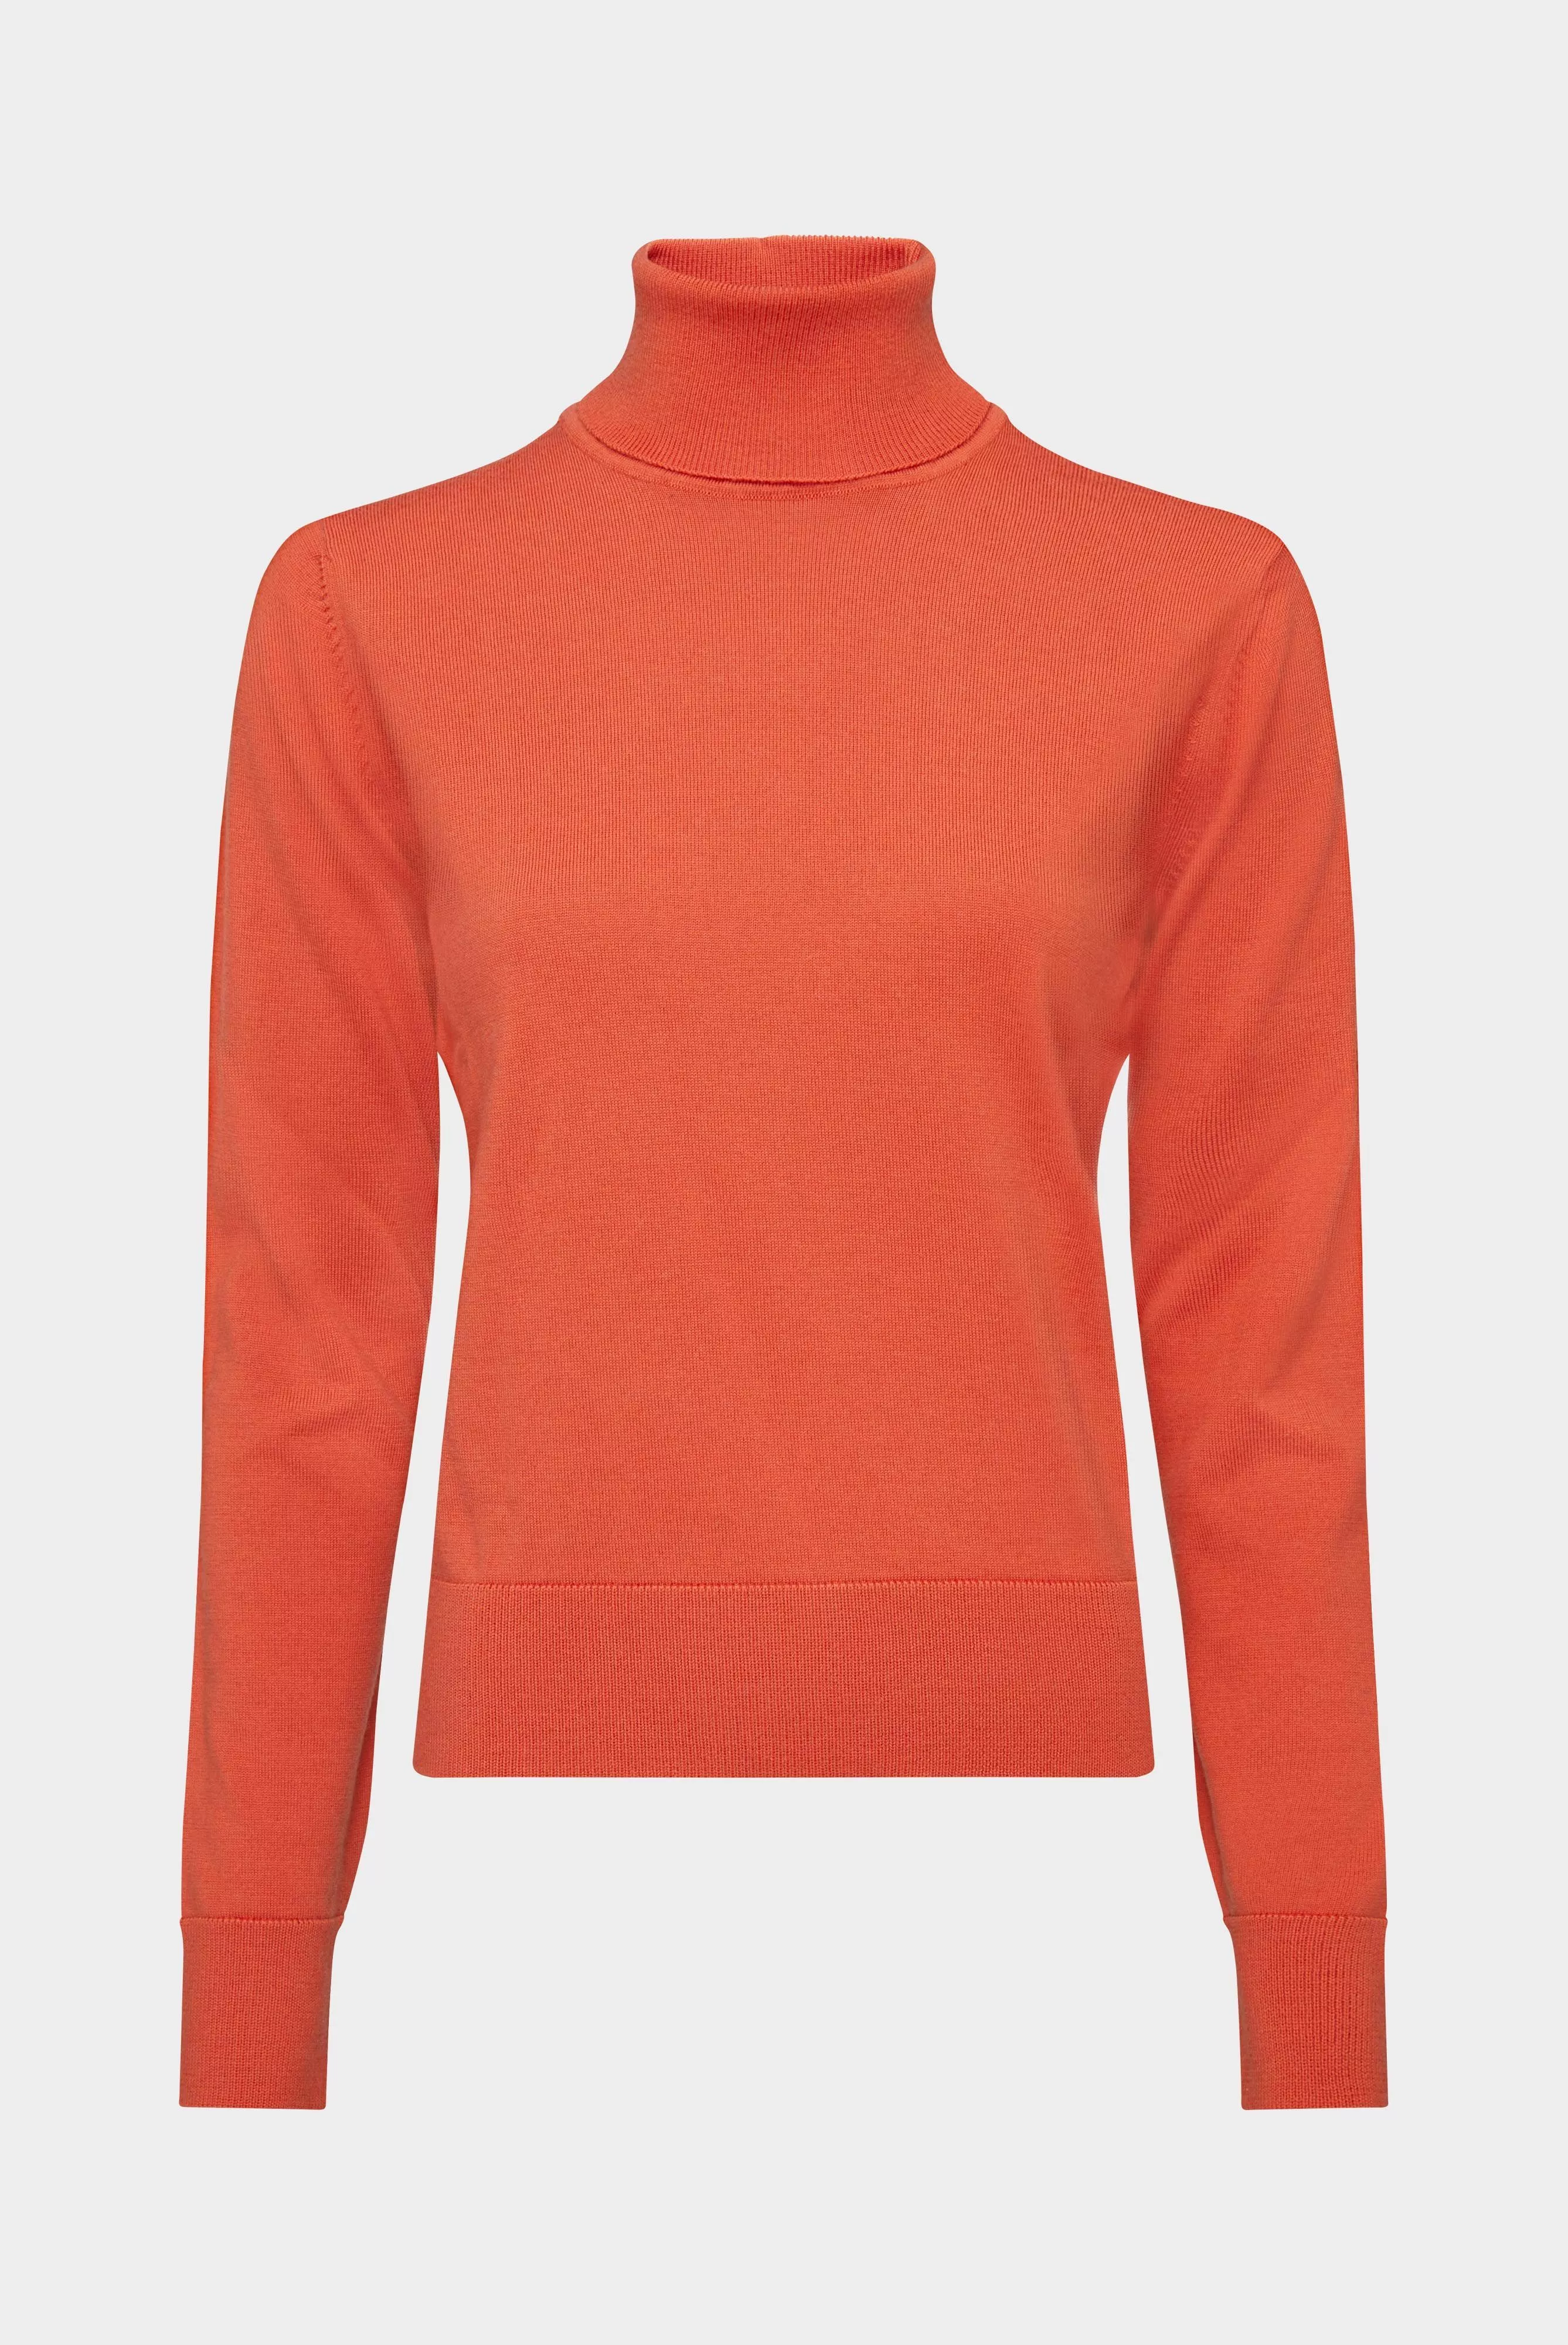 пуловер SATHE оранжевый SATHE_S00219_360 ,photo 1